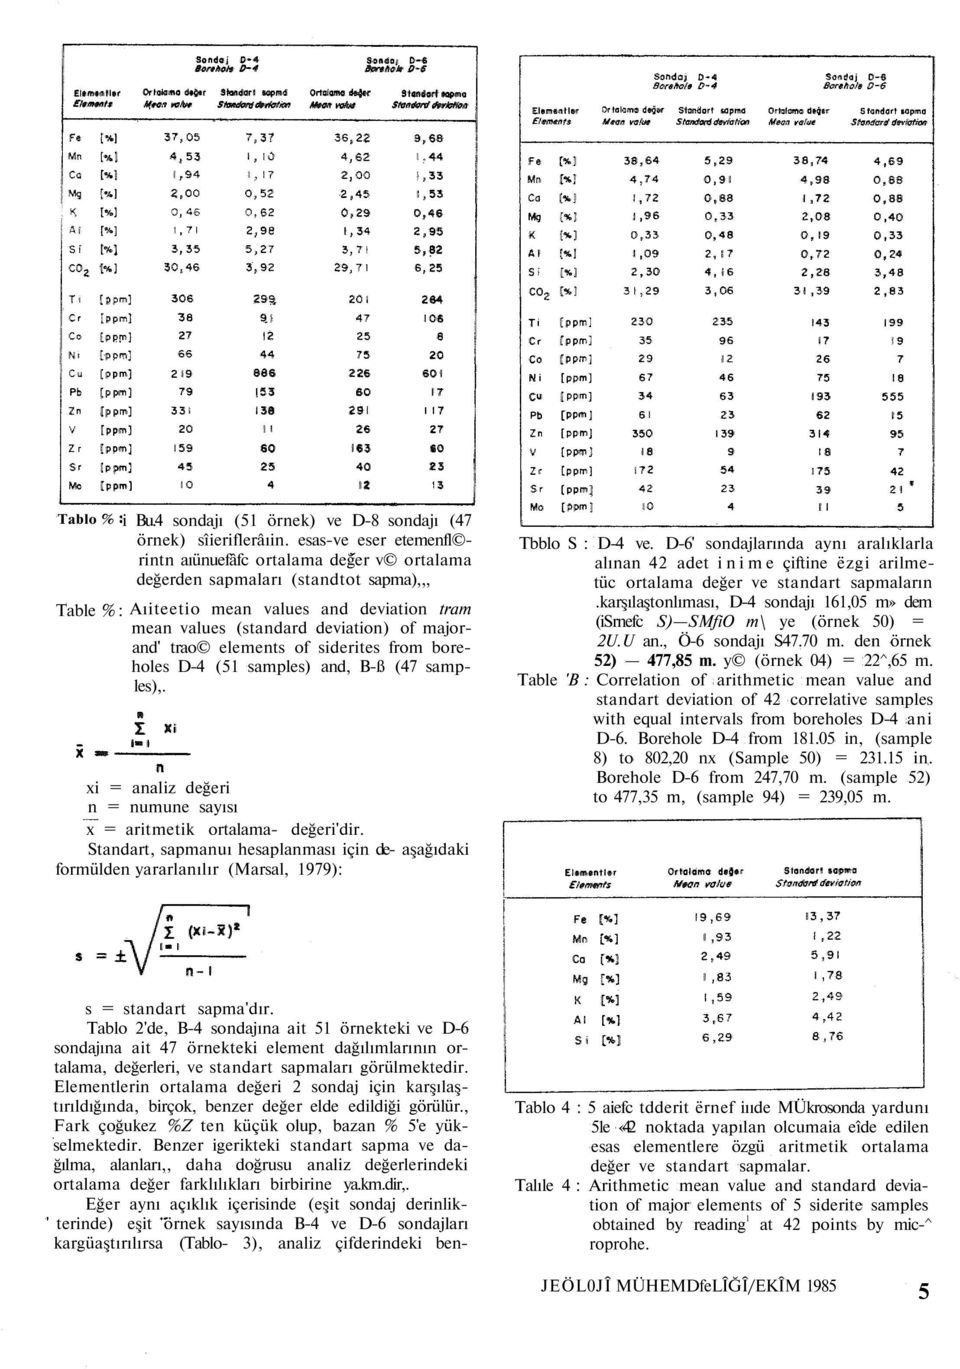 elements of siderites from boreholes D-4 (51 samples) and, B-ß (47 samples),. xi = analiz değeri n = numune sayısı x = aritmetik ortalama- değeri'dir.